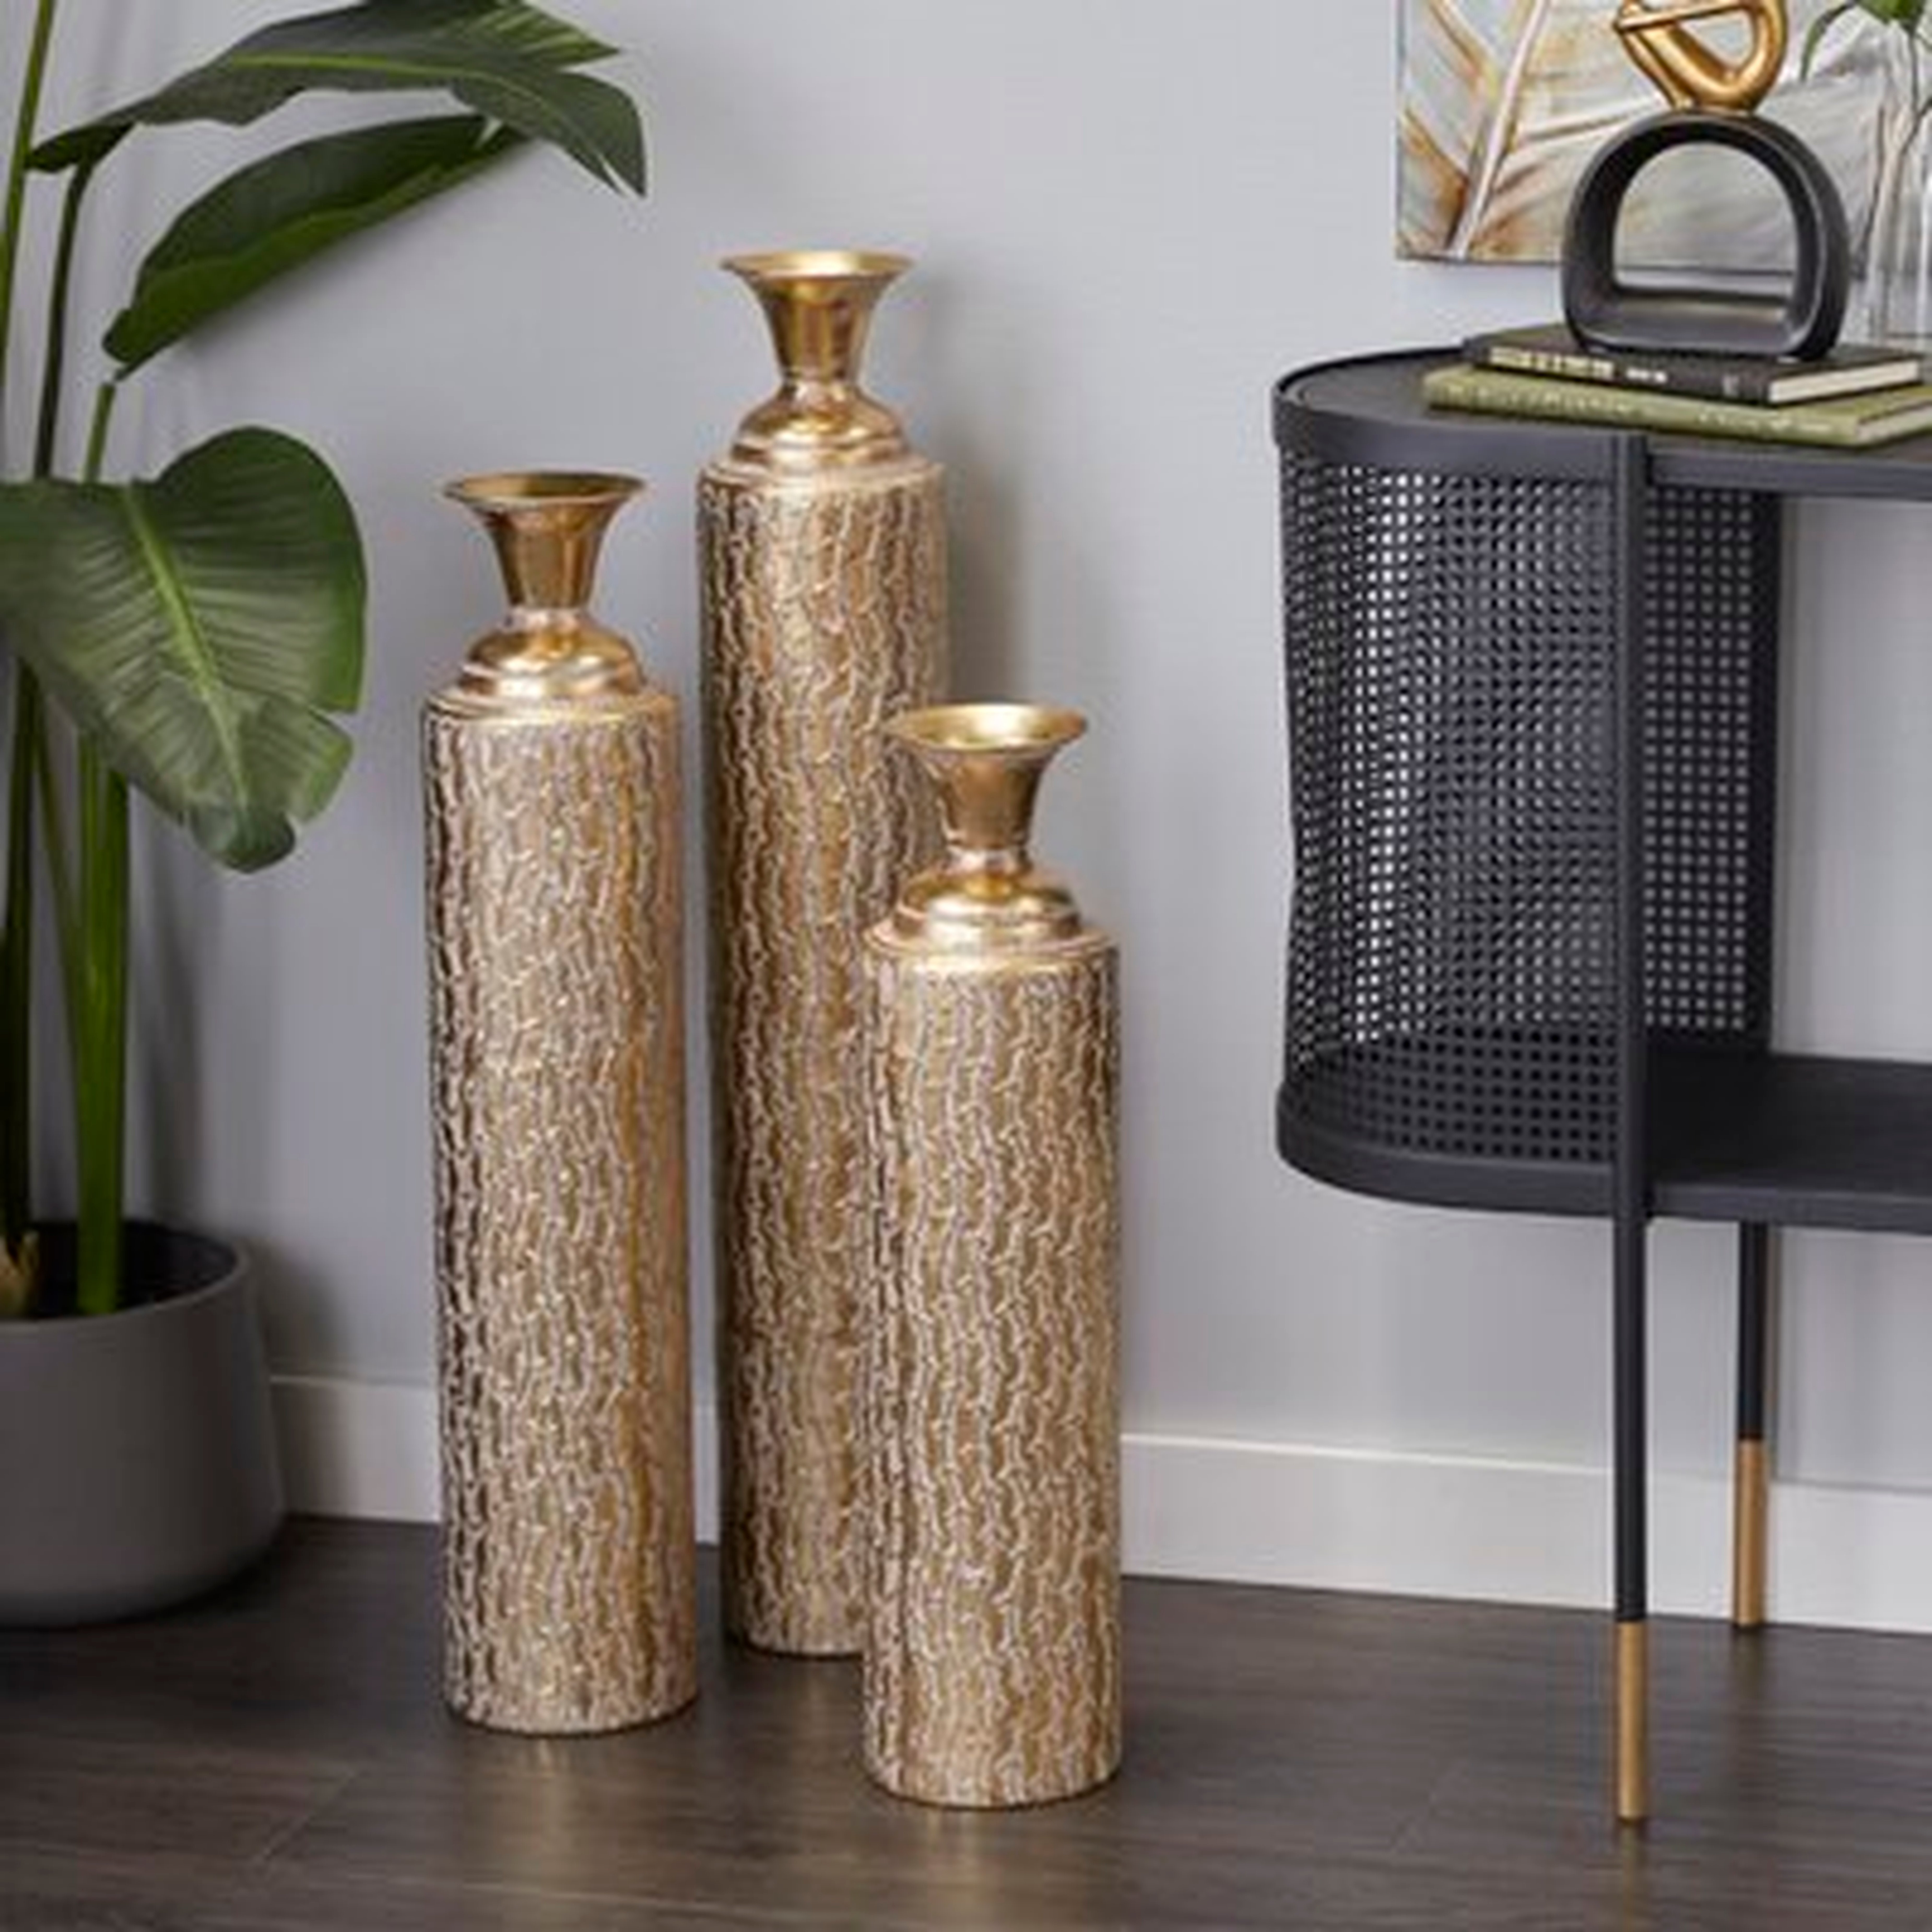 3 Piece Noicolina Gold Wood Floor Vase Set - Wayfair